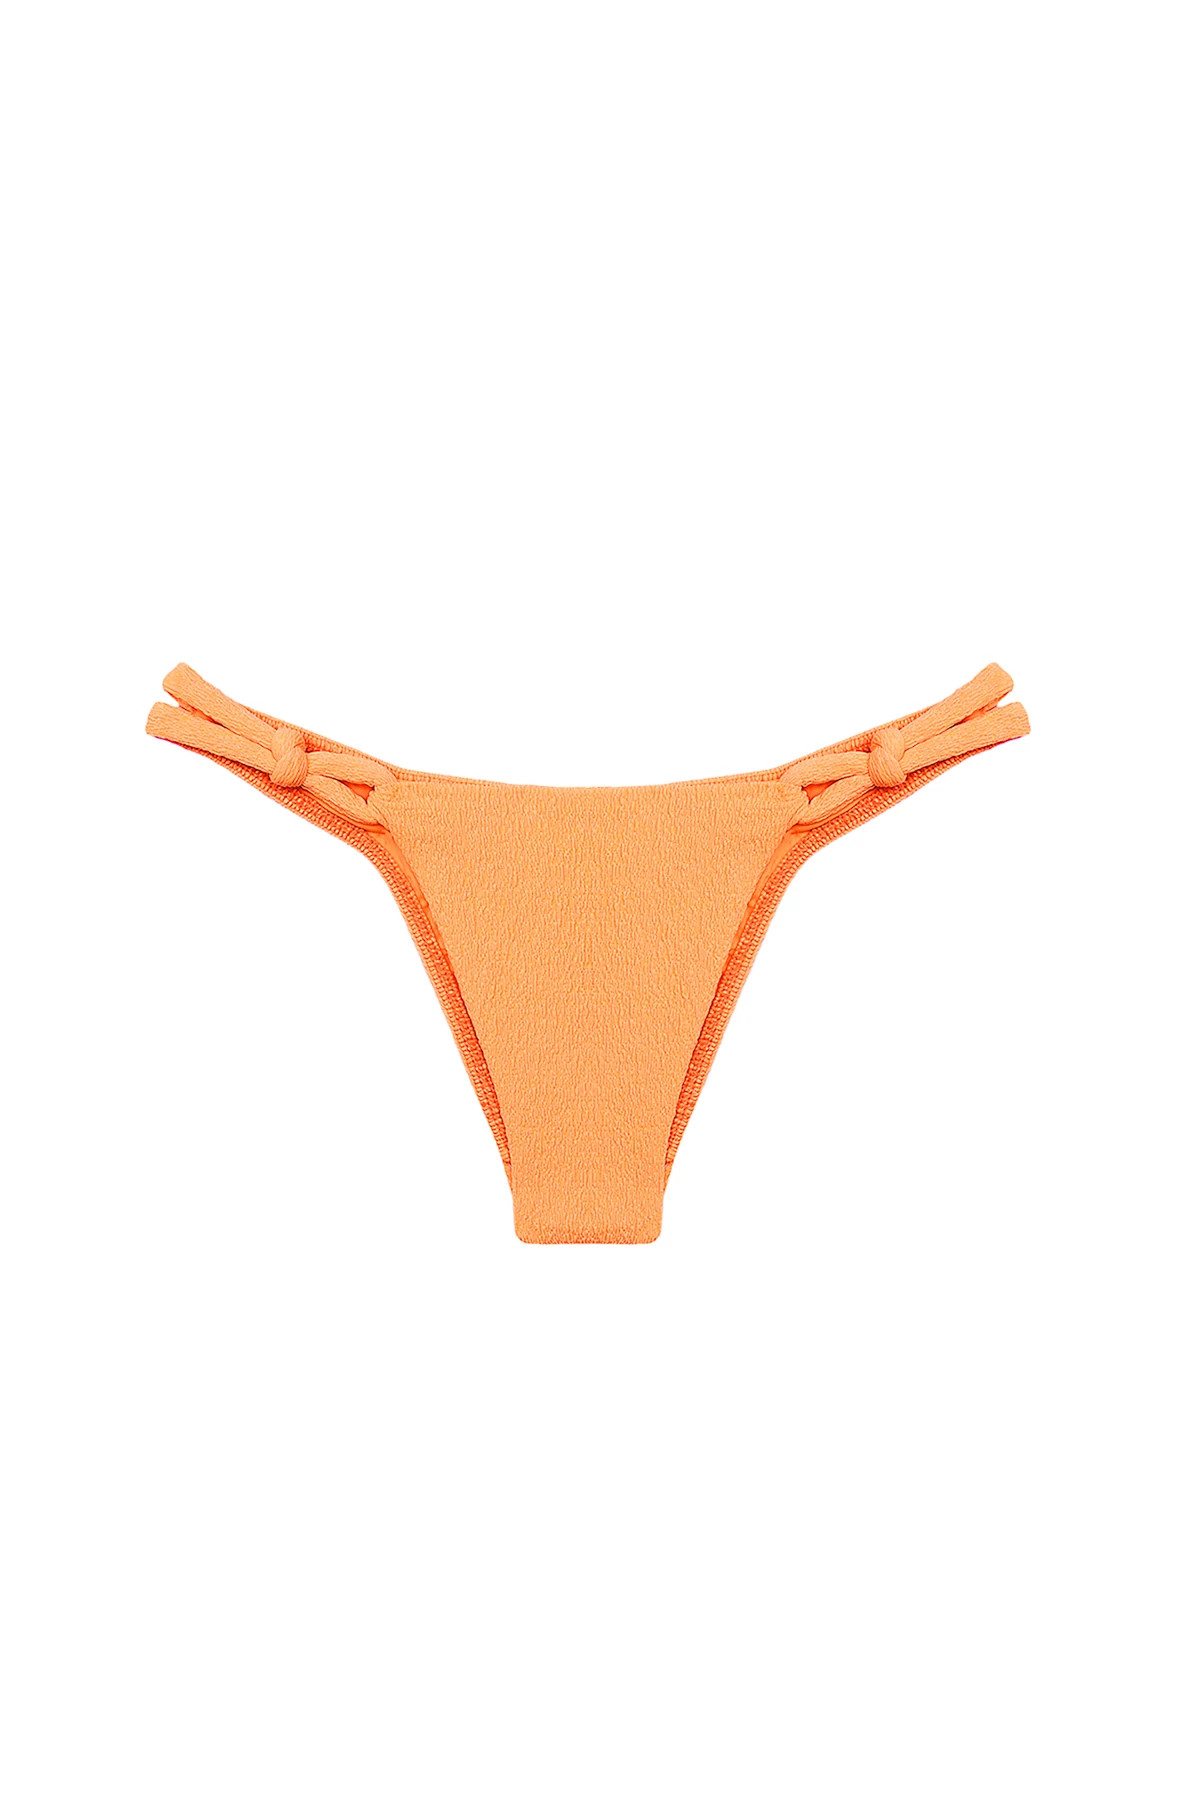 MANDARINE Edie Tab Side Brazilian Bikini Bottom image number 3